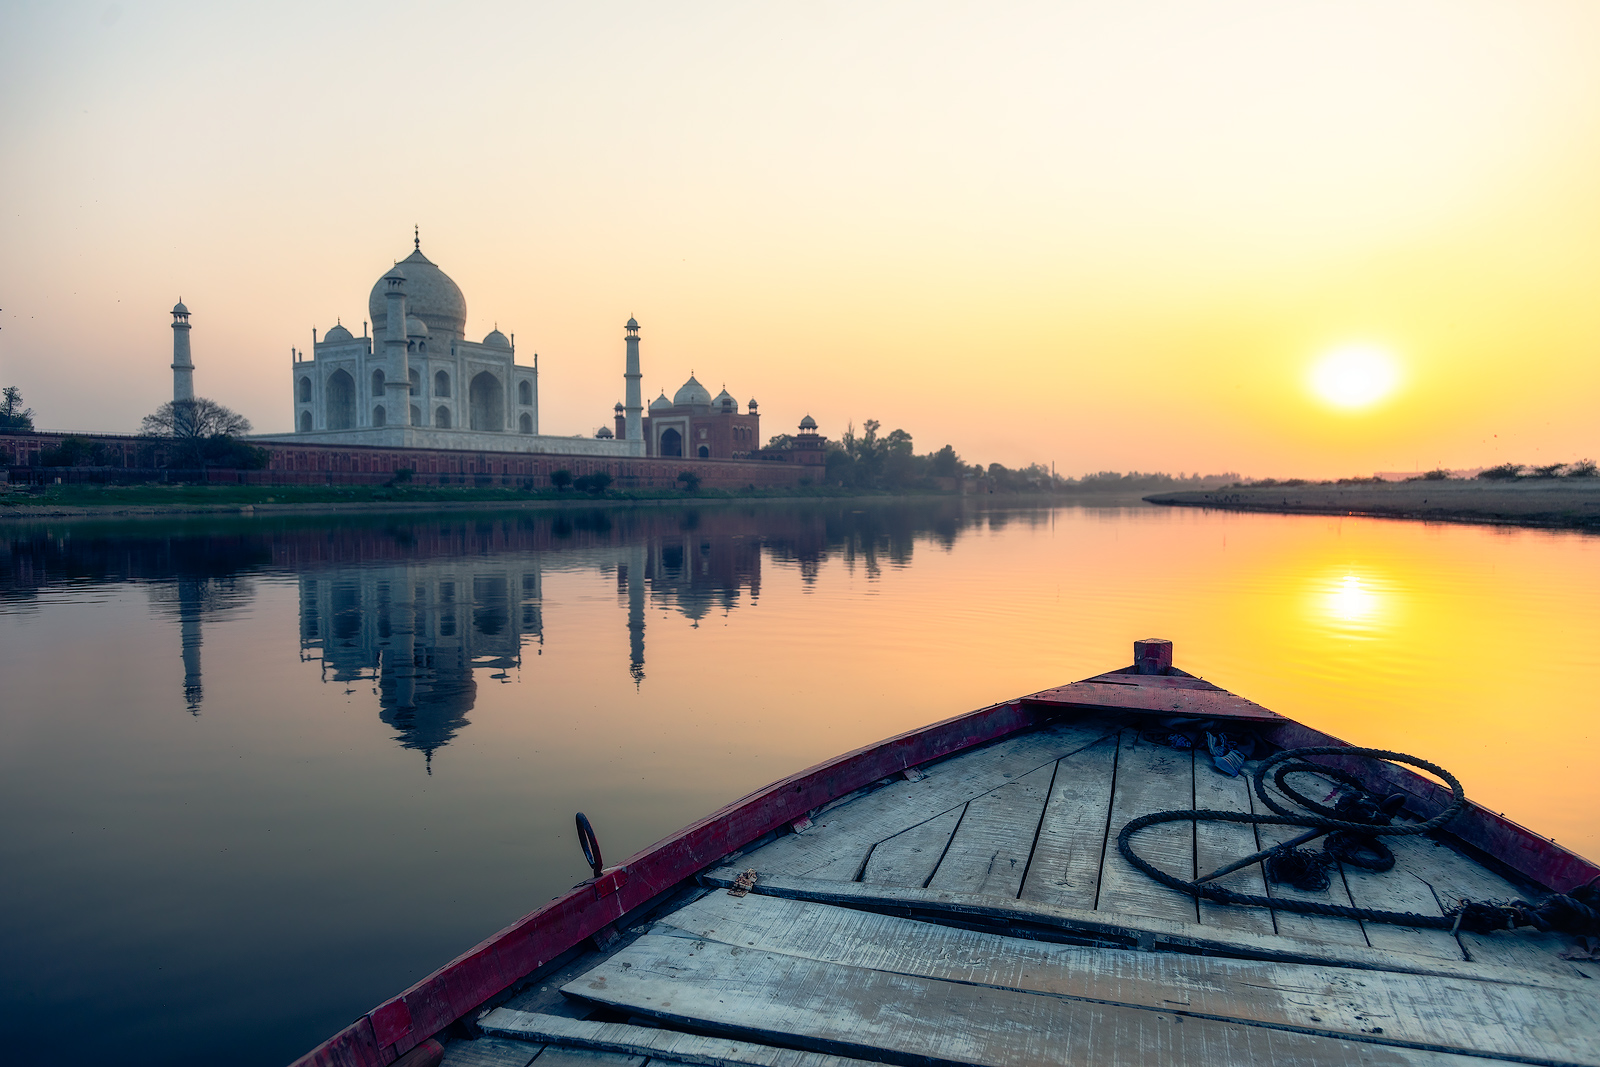 Aboard a fishing boat behind the amazing Taj Mahal at sunset.